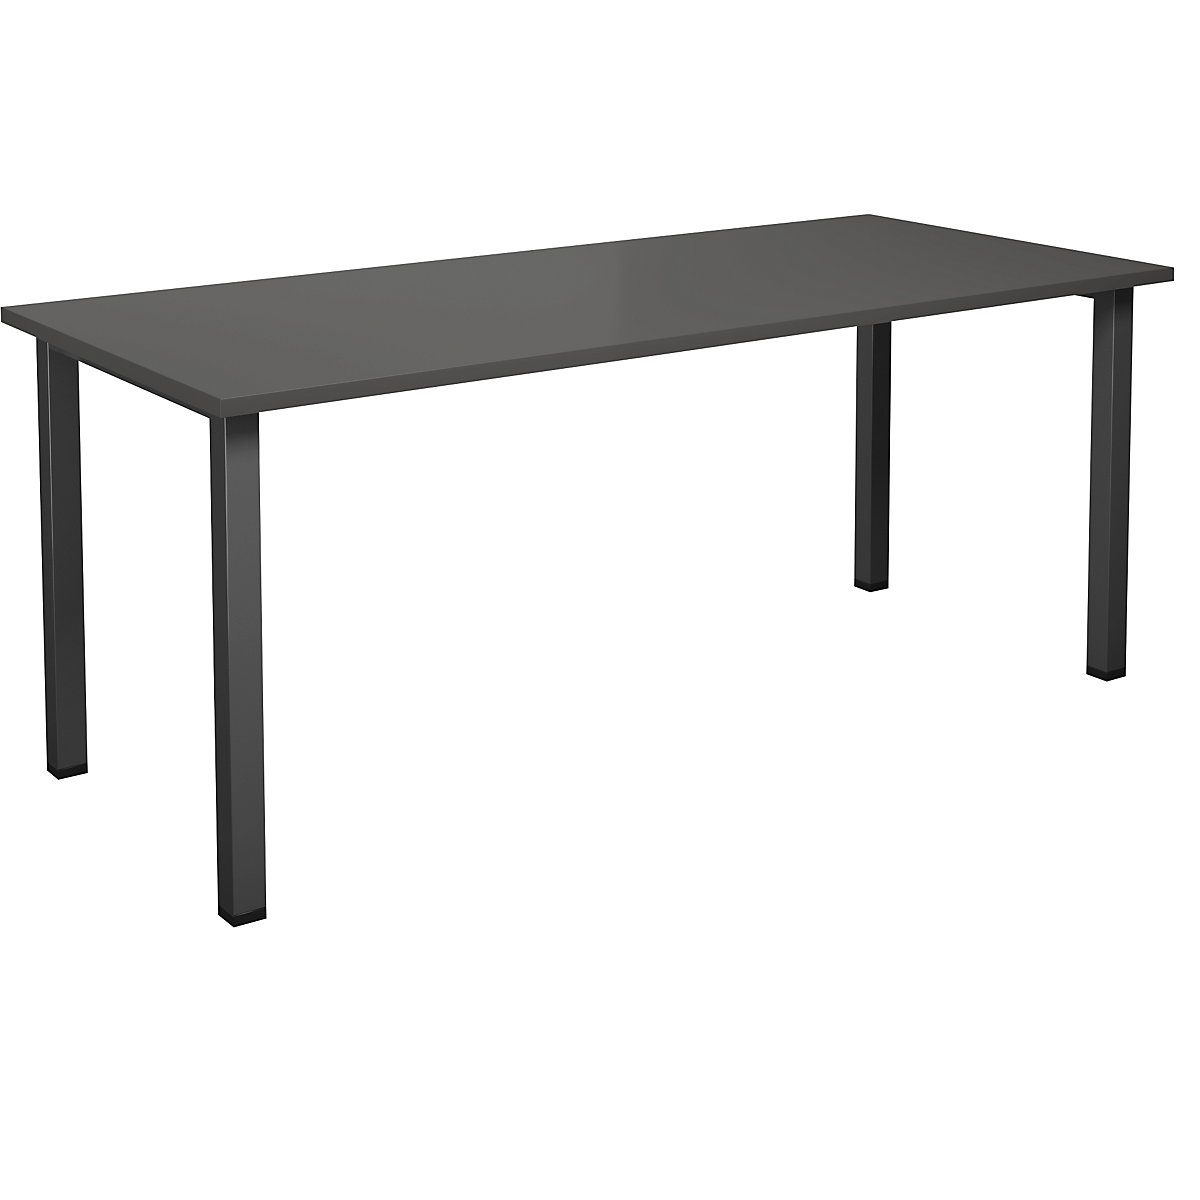 DUO-U multi-purpose desk, straight tabletop, WxD 1800 x 800 mm, dark grey, black-11